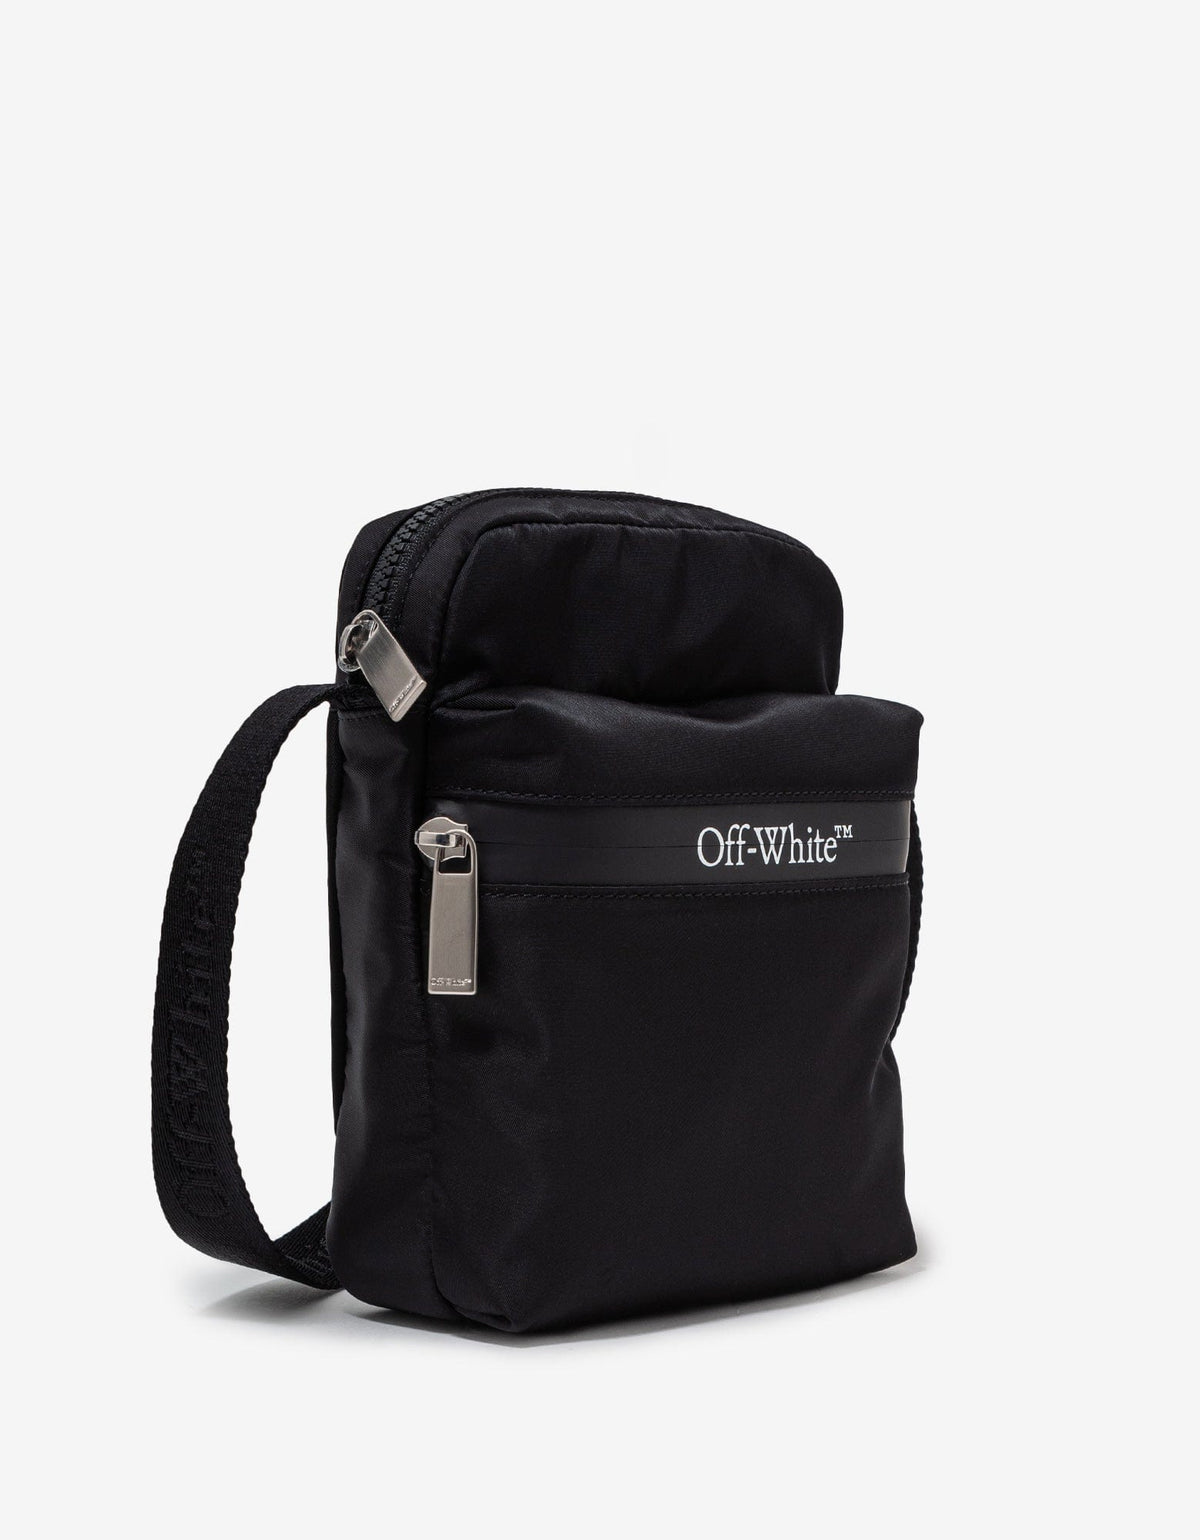 Off-White Off-White Outdoor Black Crossbody Bag